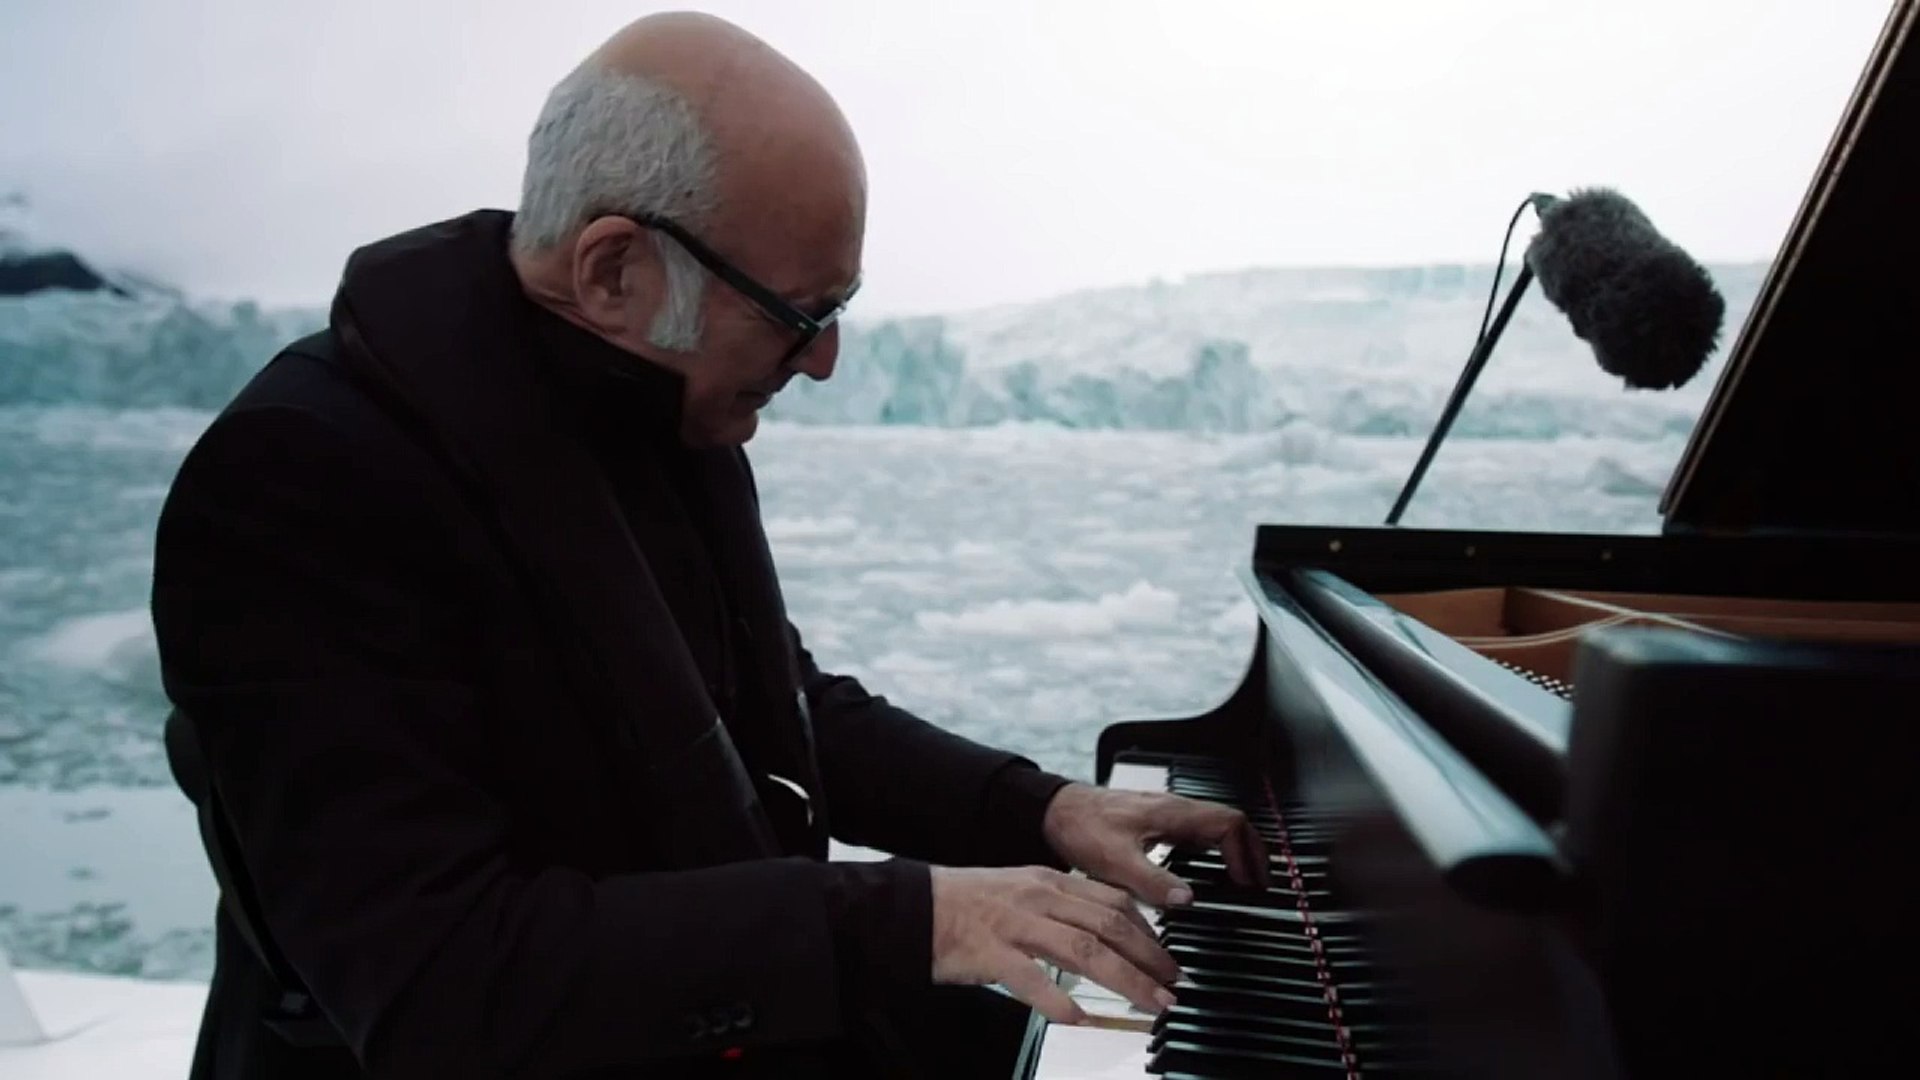 Composer and Pianist Ludovico Einaudi Performs in the Arctic Ocean 06.2016